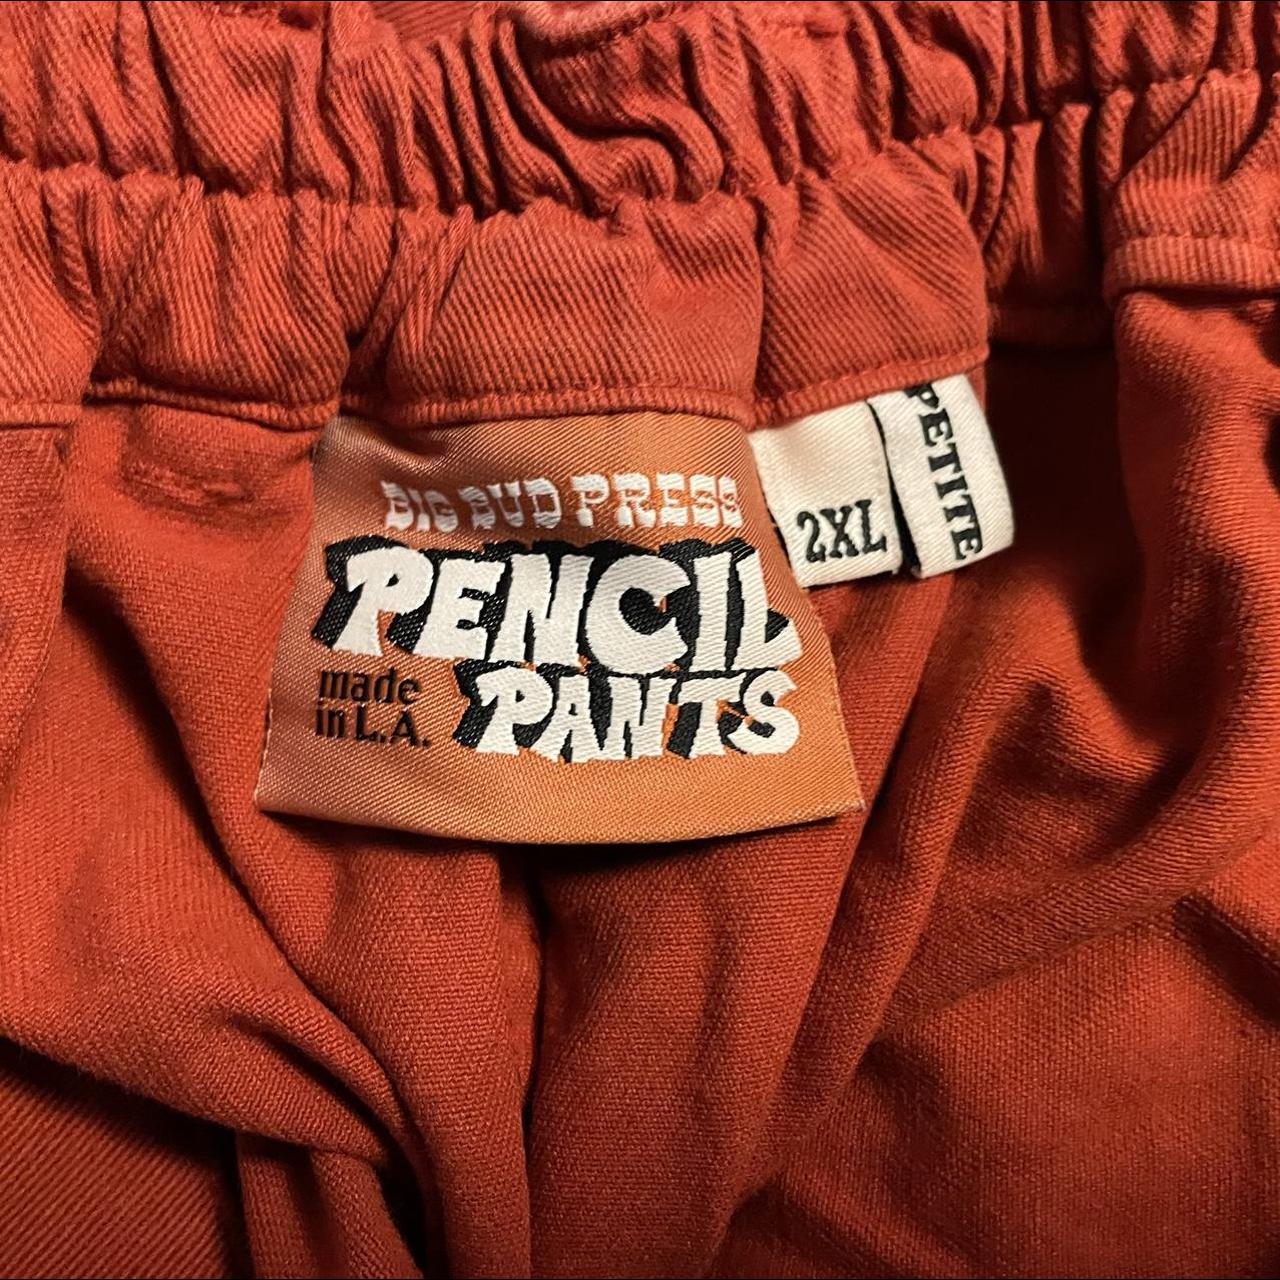 Pencil Pants - Basic Black – BIG BUD PRESS